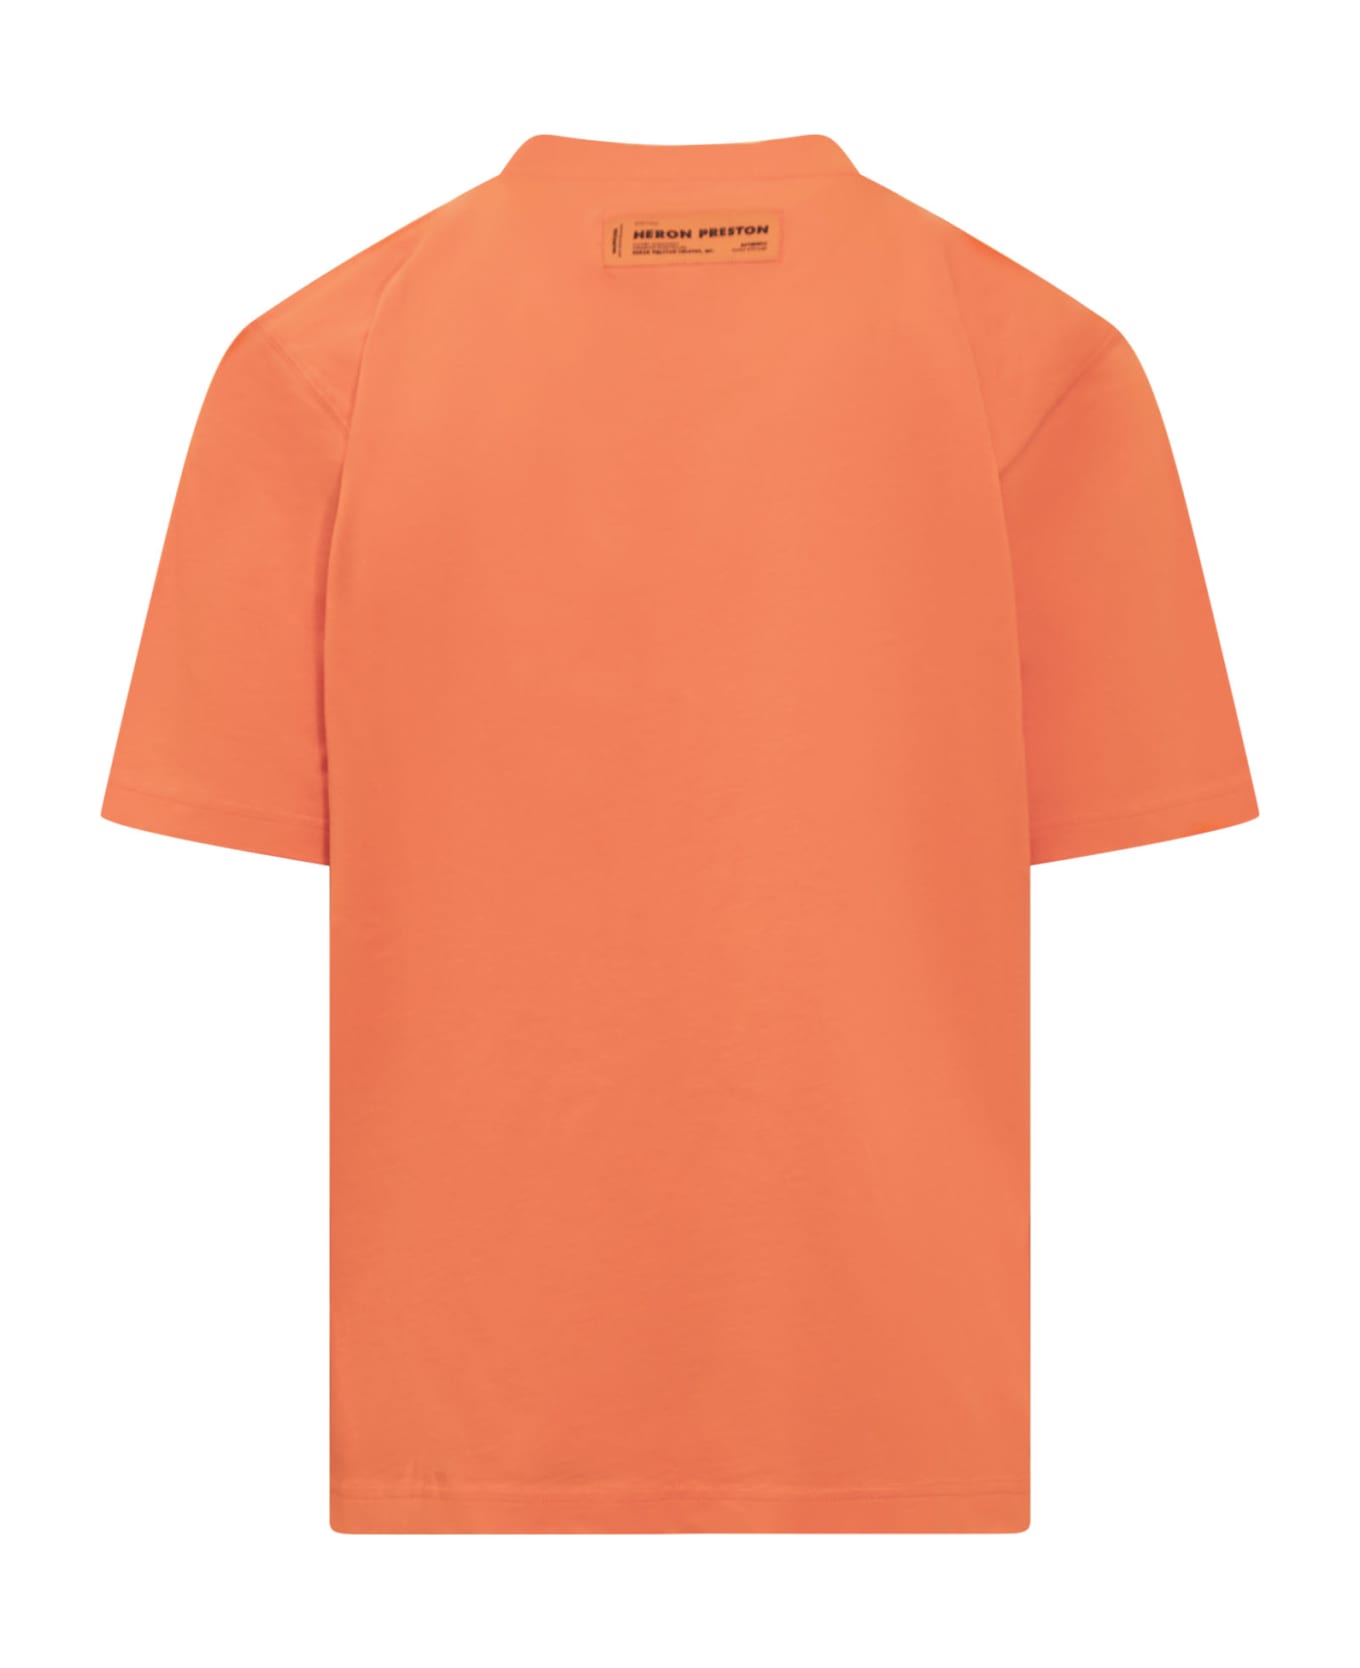 HERON PRESTON Hpny Embroidery T-shirt - Orange/white